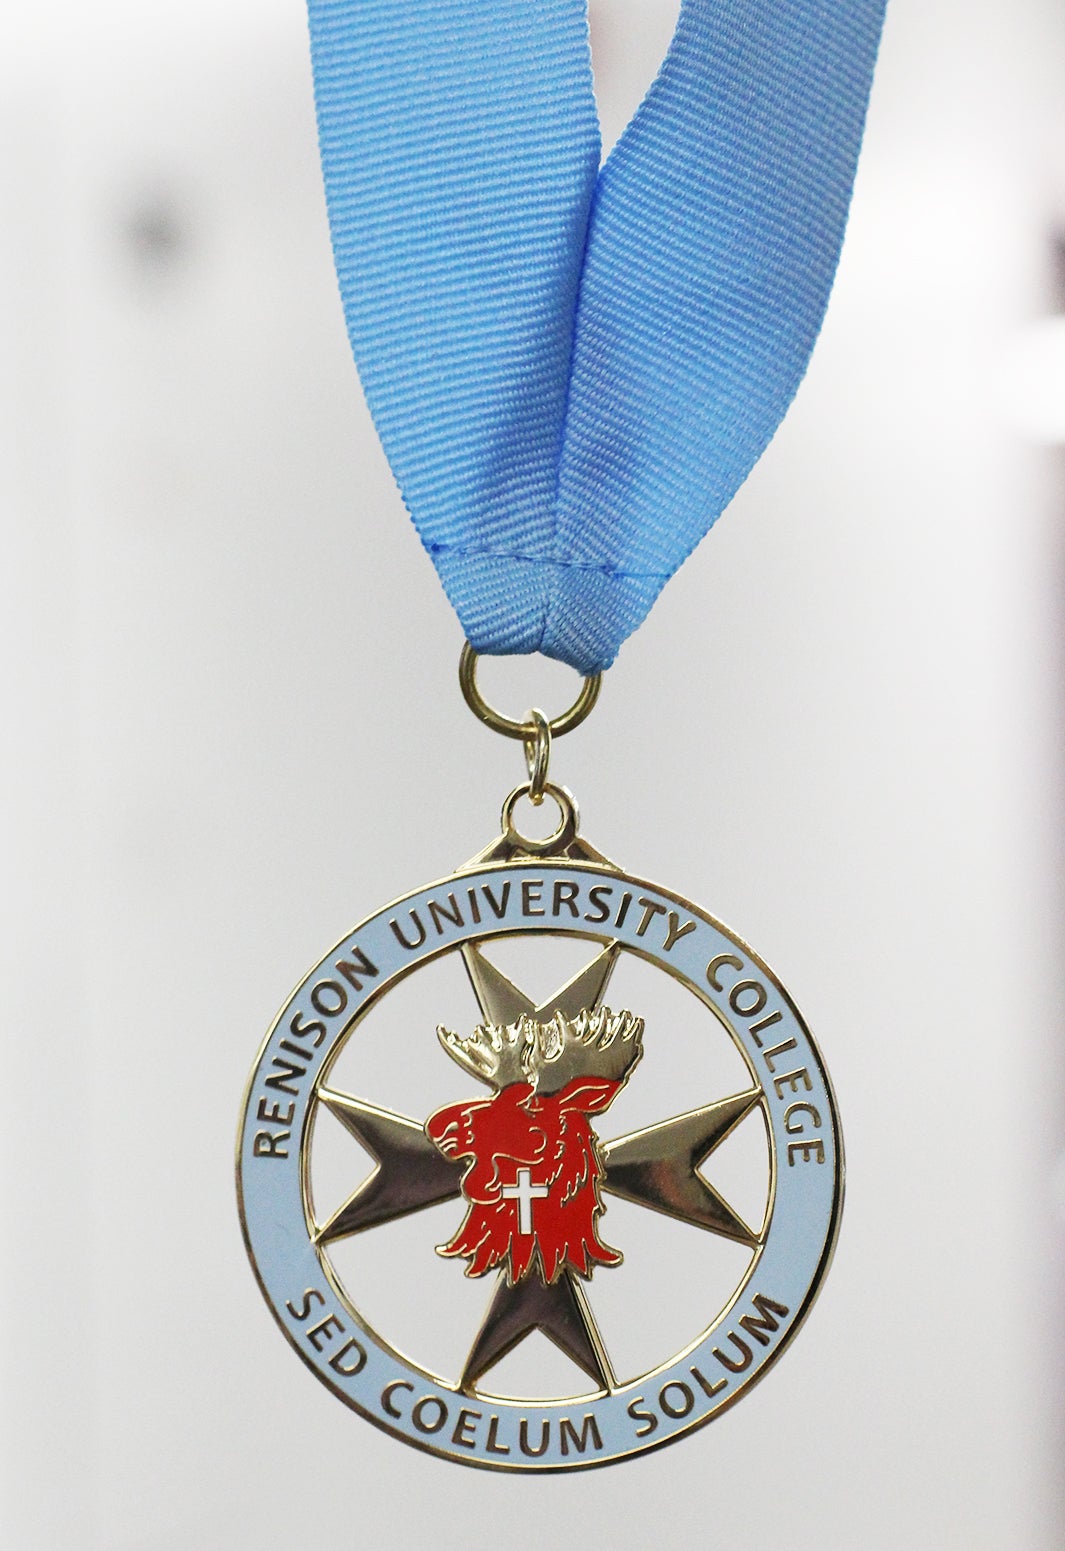 Honorary Member Medal